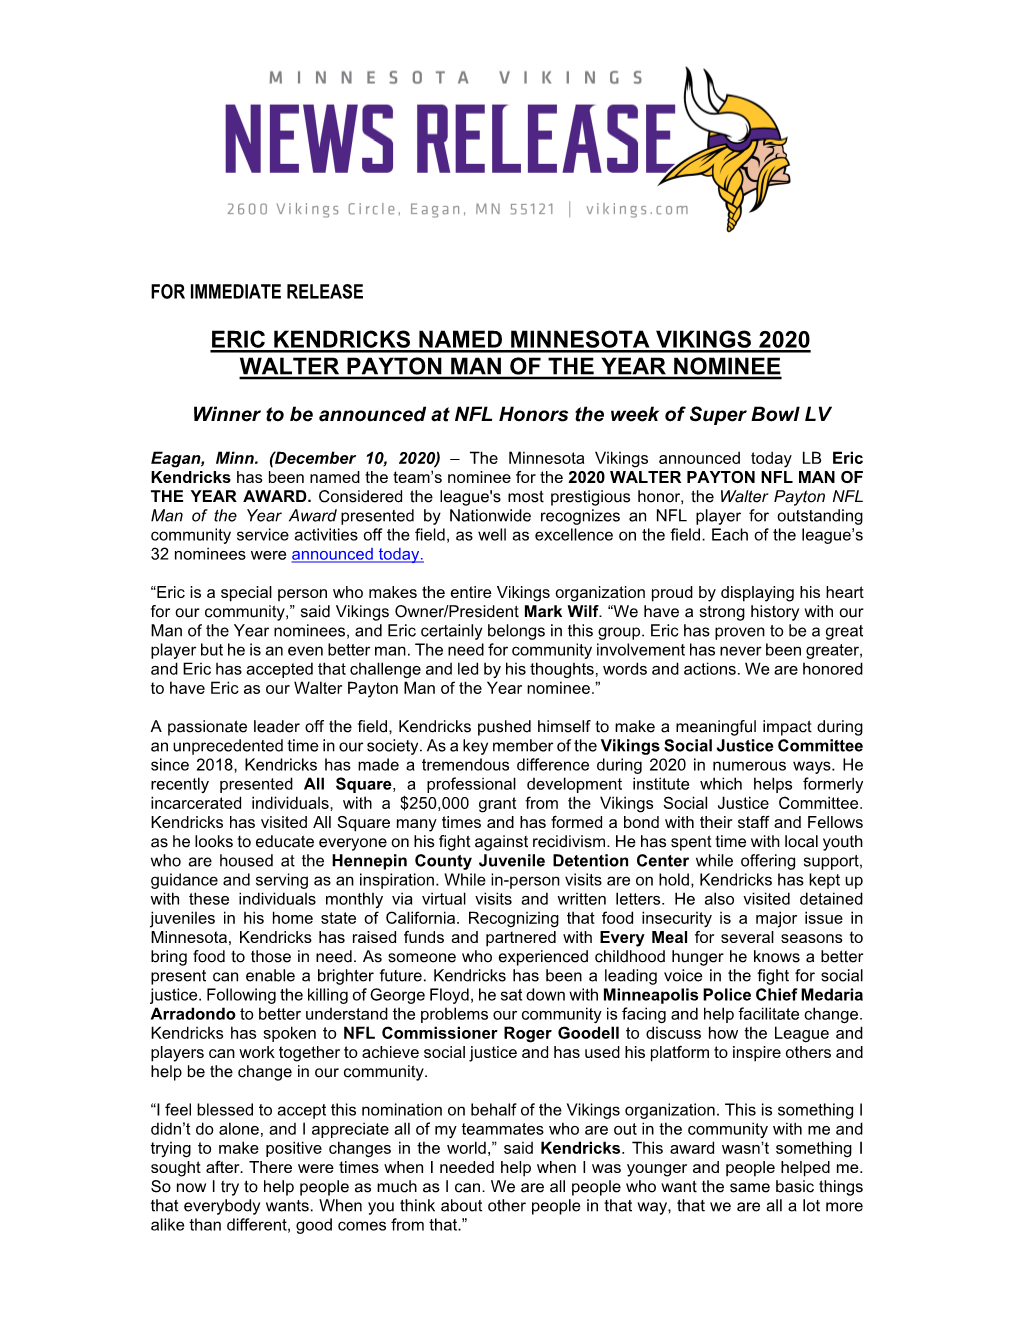 Eric Kendricks Named Minnesota Vikings 2020 Walter Payton Man of the Year Nominee